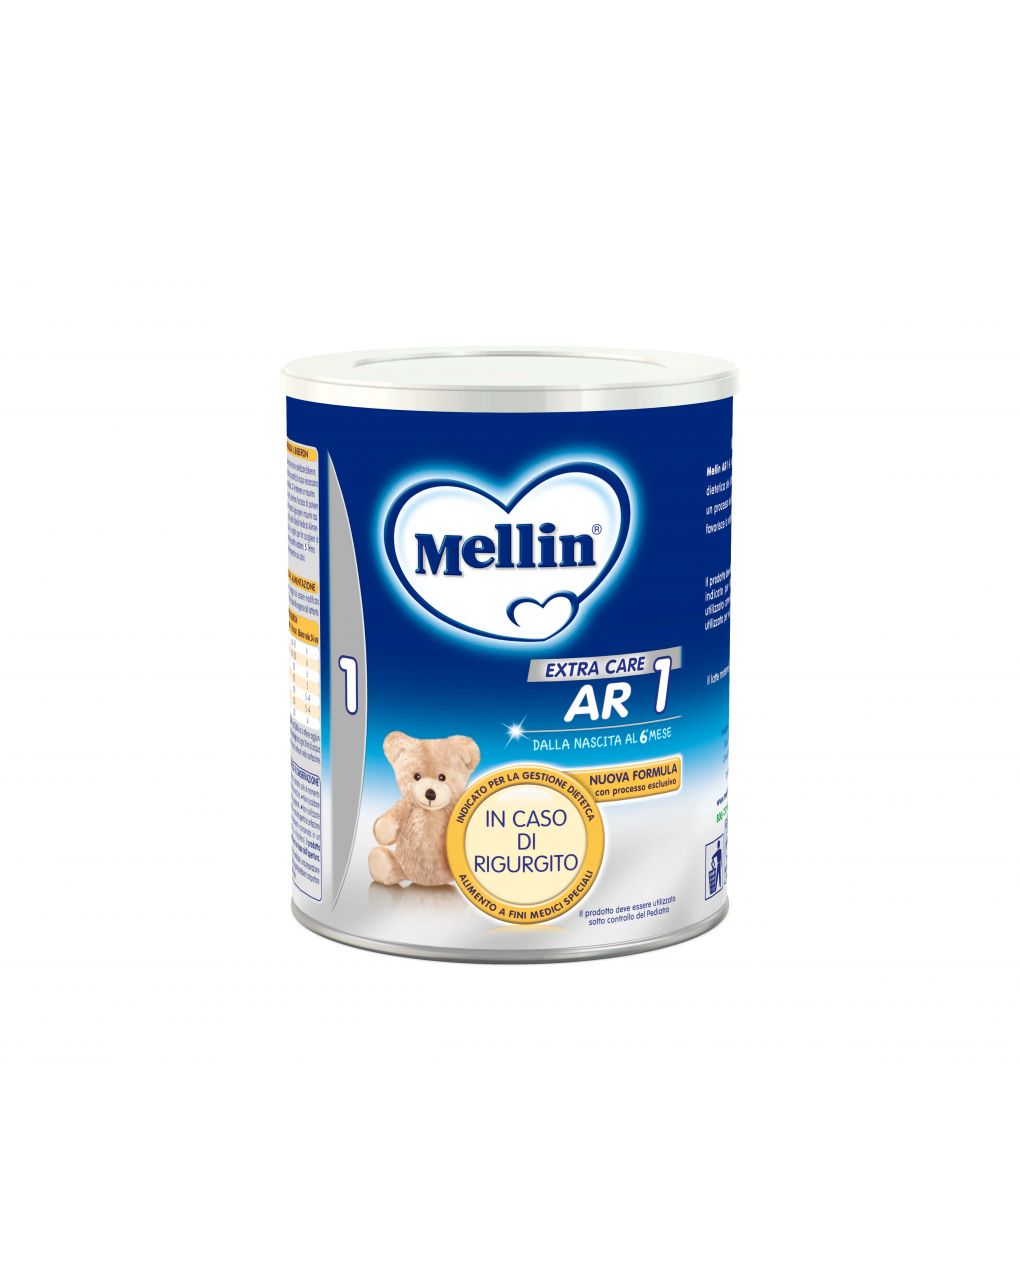 Mellin - latte mellin ar 1 polvere 400g